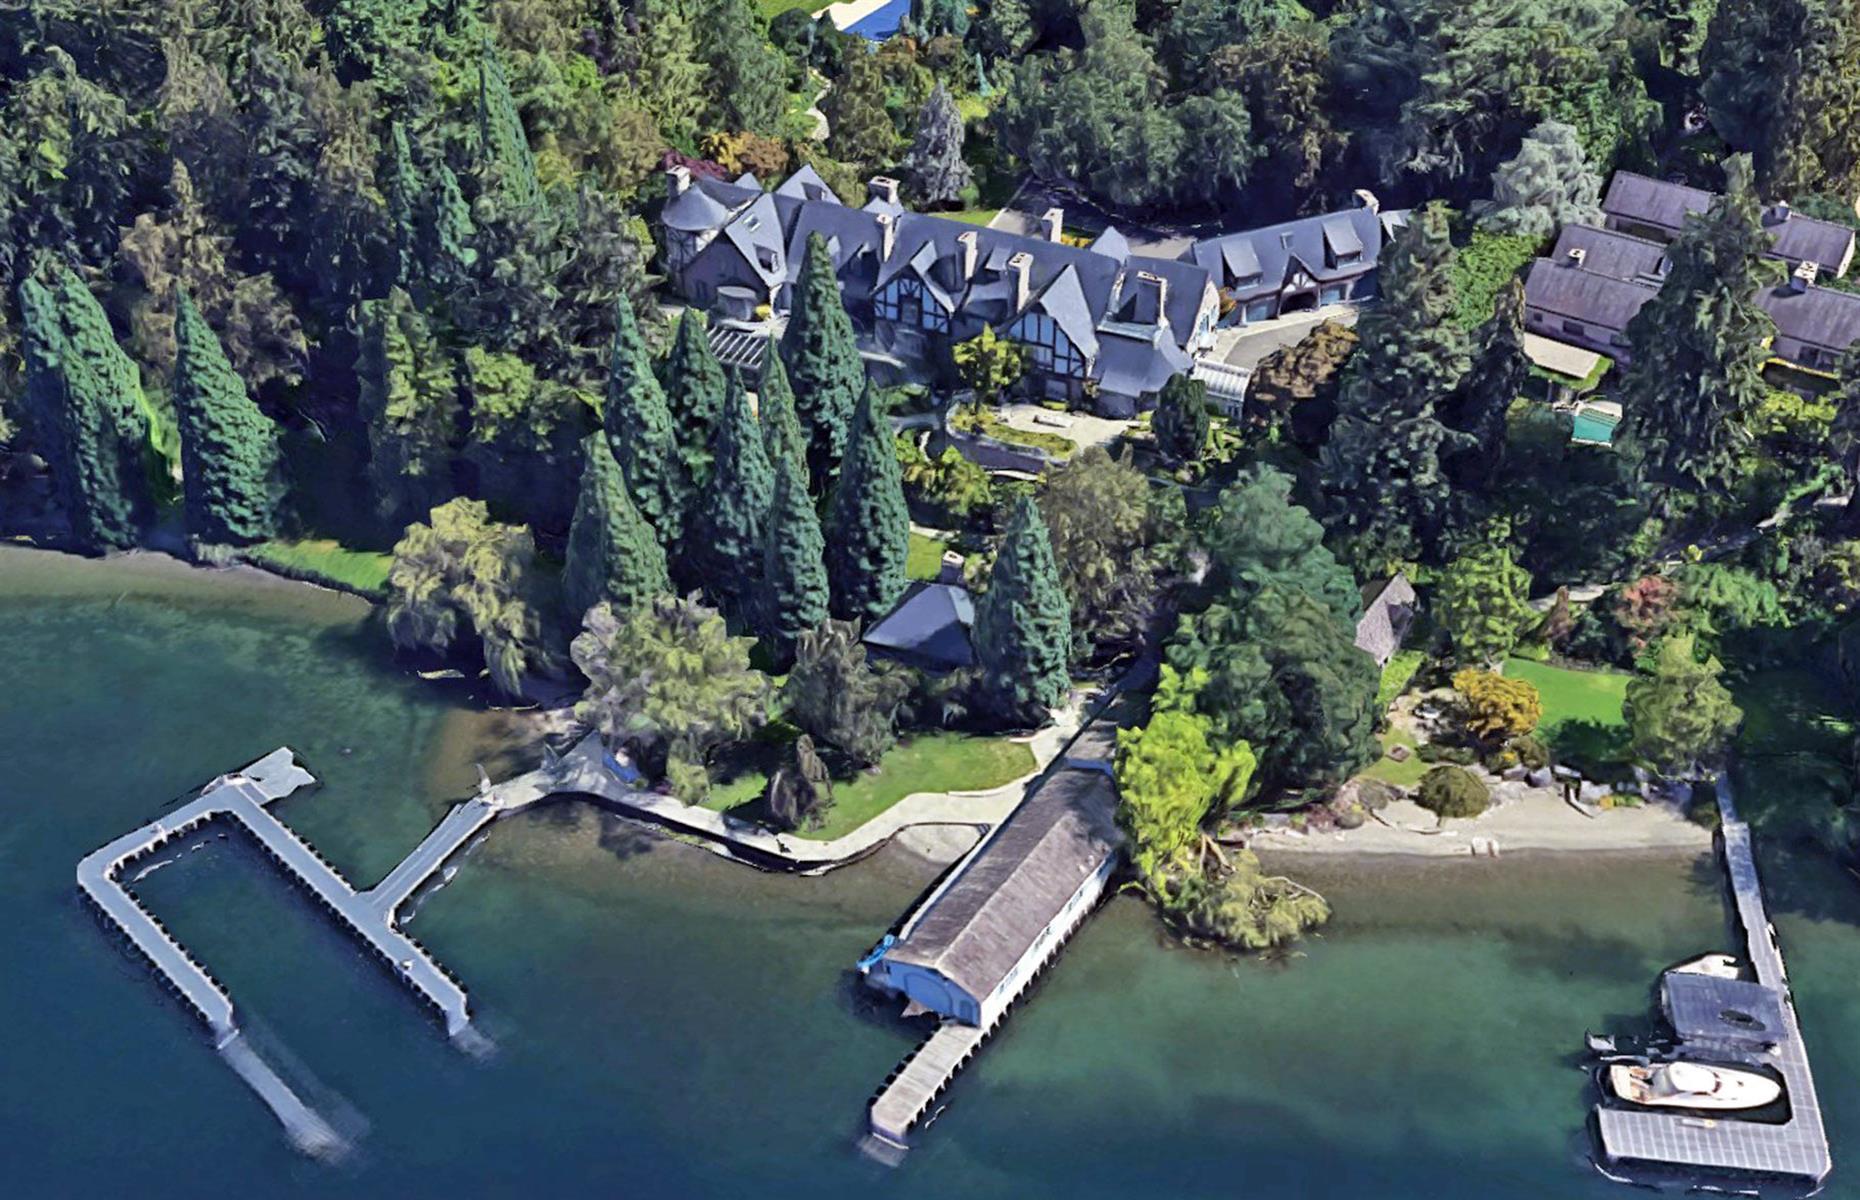 Jeff Bezos’s two lakeside mansions in Washington state